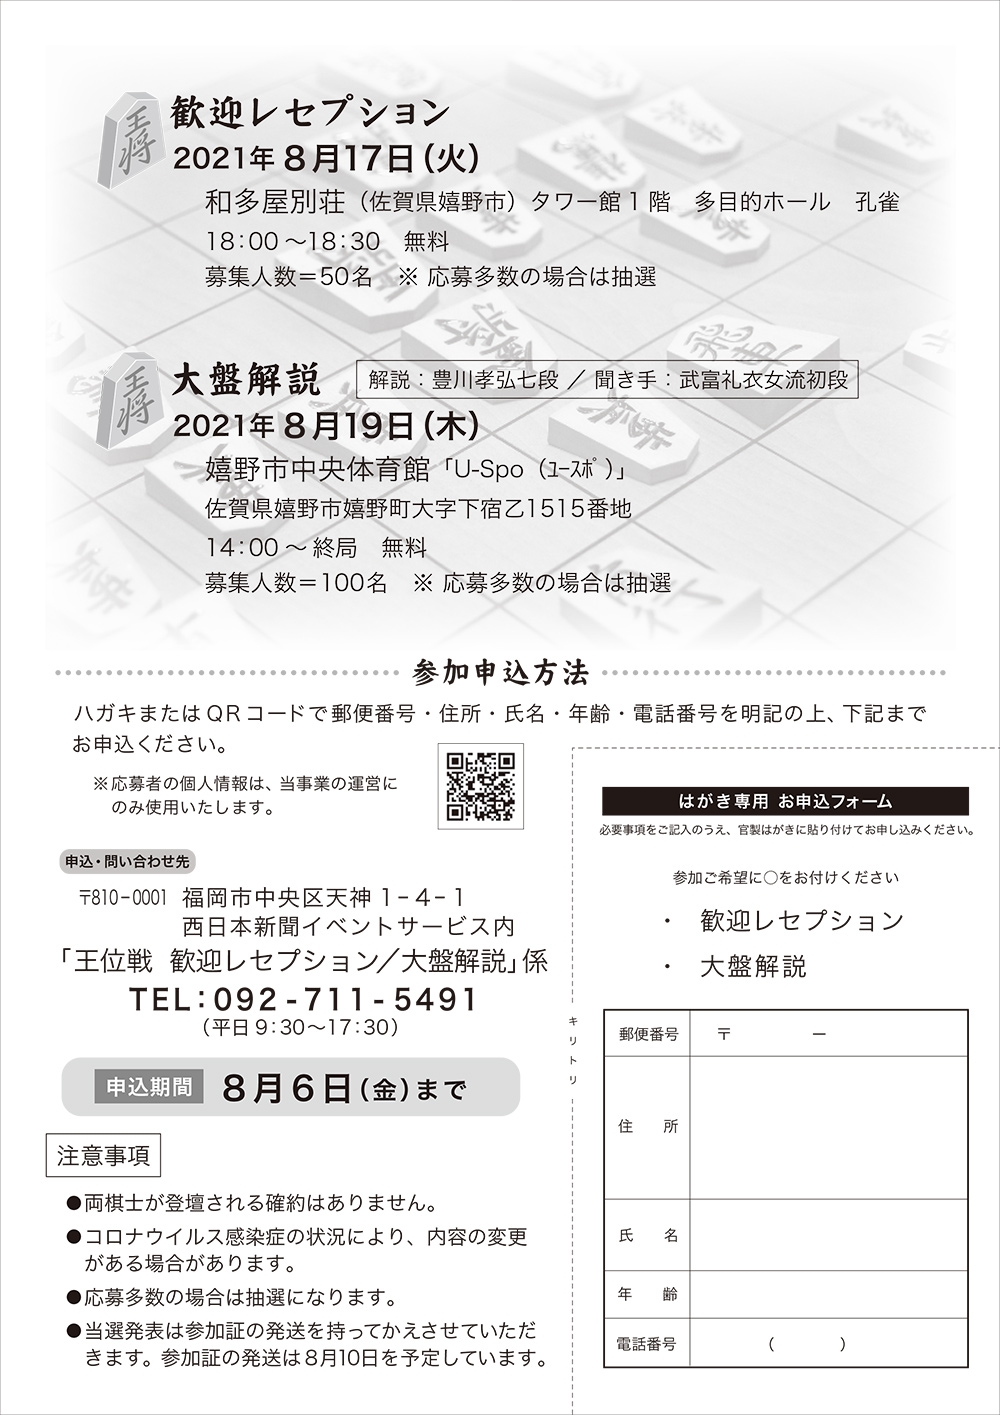 https://www.shogi.or.jp/event/entry_images/0713ouisen-2.jpg